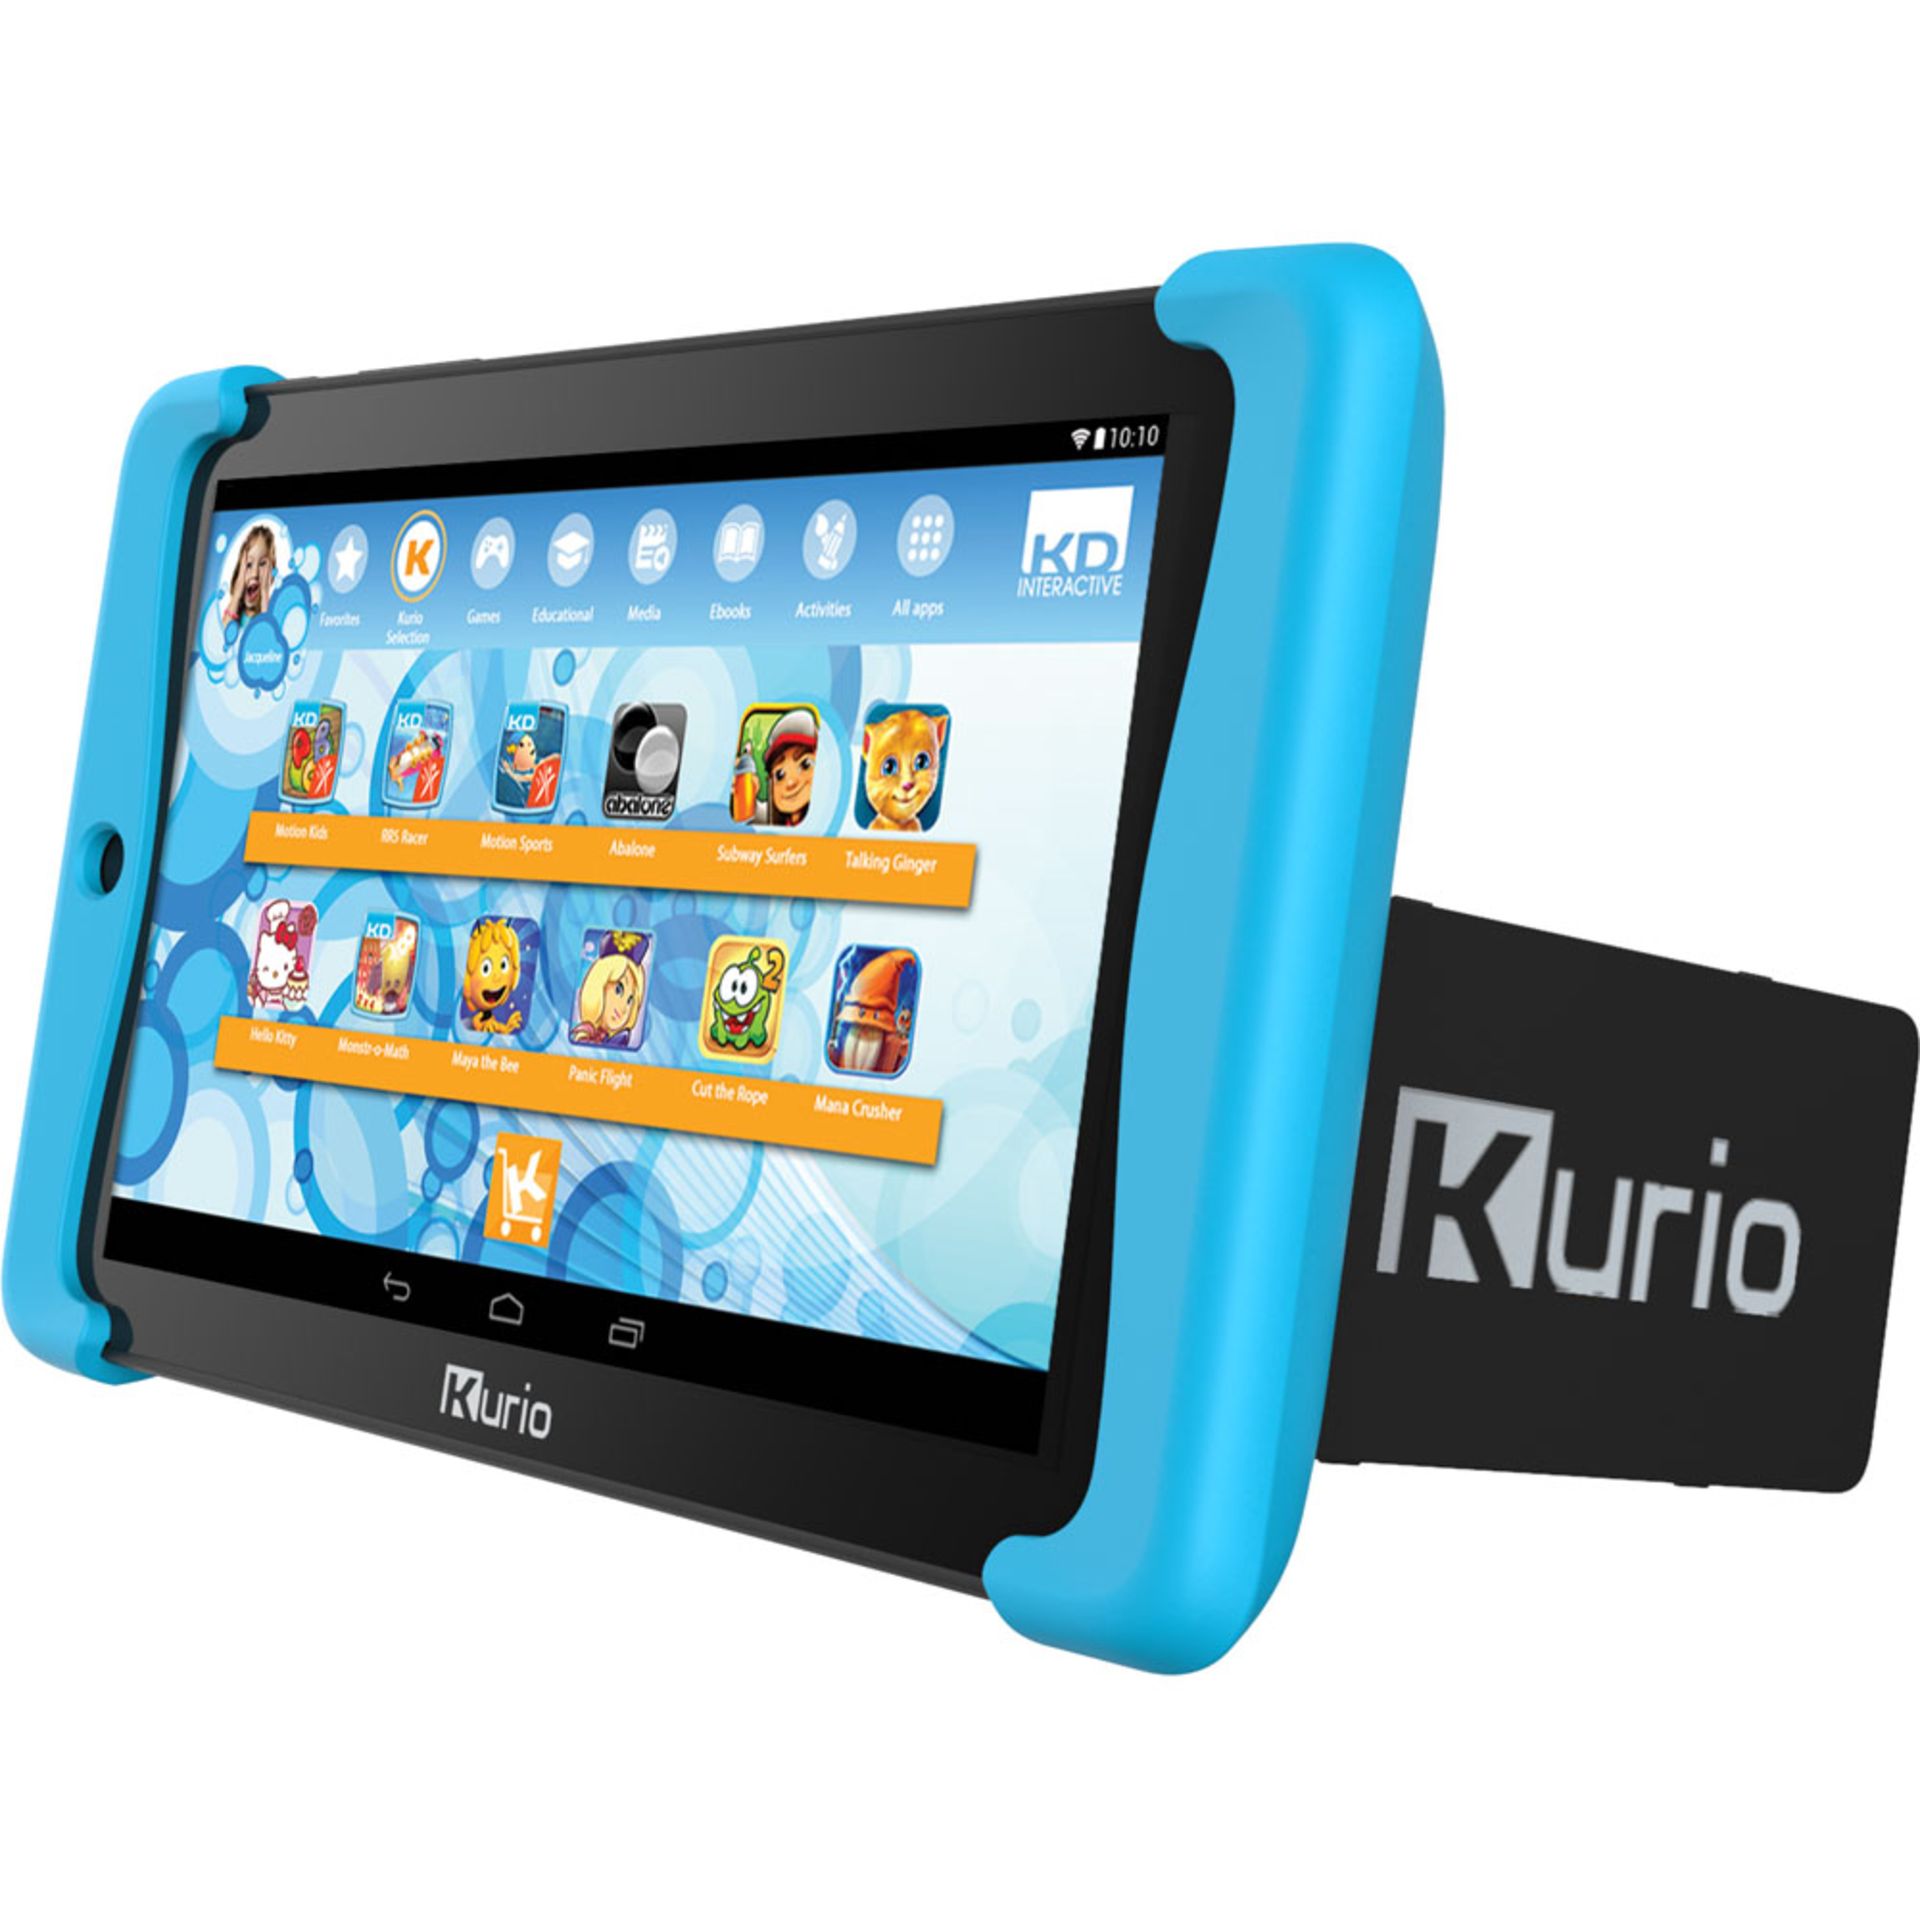 V *TRADE QTY* Grade A Kurio Tab2 Motion Edition 7" Screen 8Gb Storage Children's Tablet Preloaded